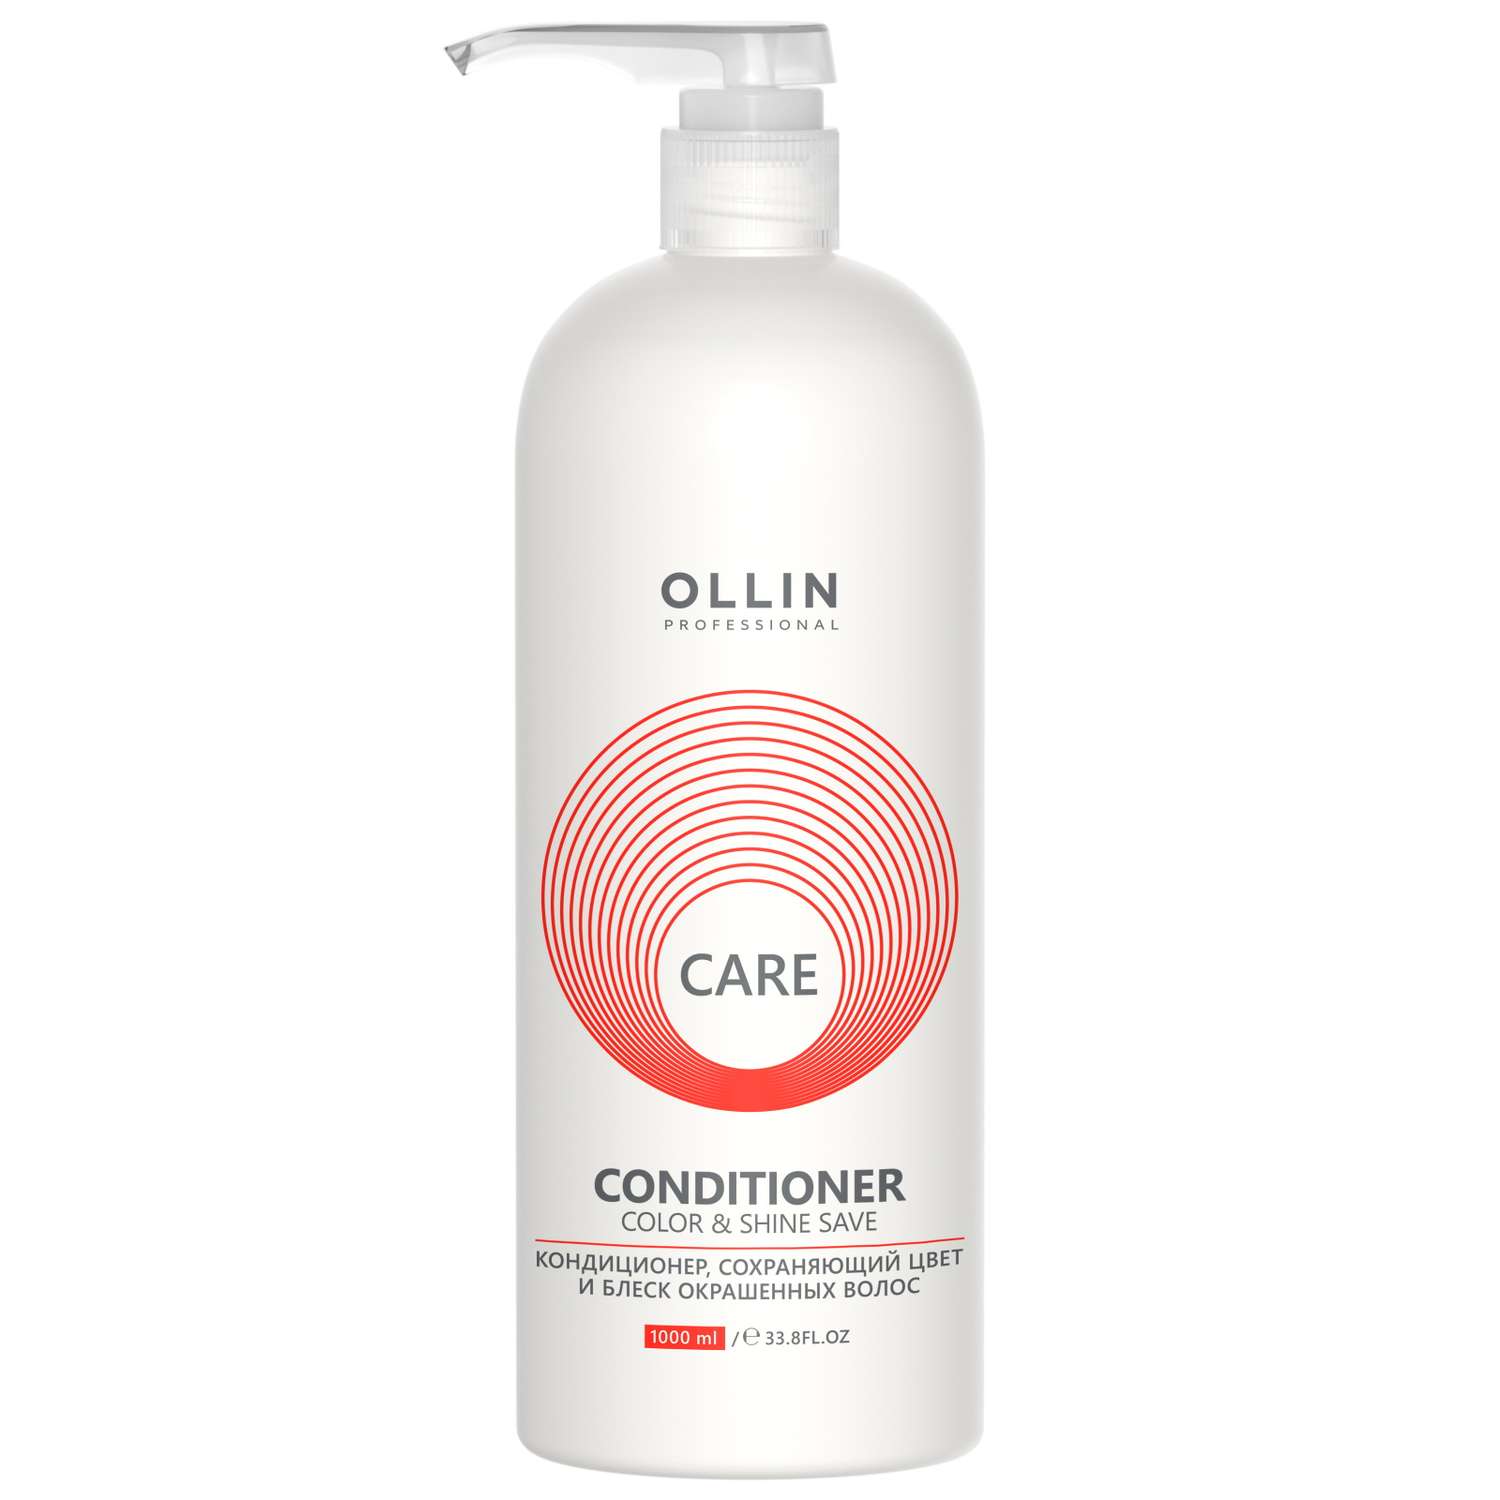 Кондиционер Ollin Care для окрашенных волос color and shine save 1000 мл - фото 1